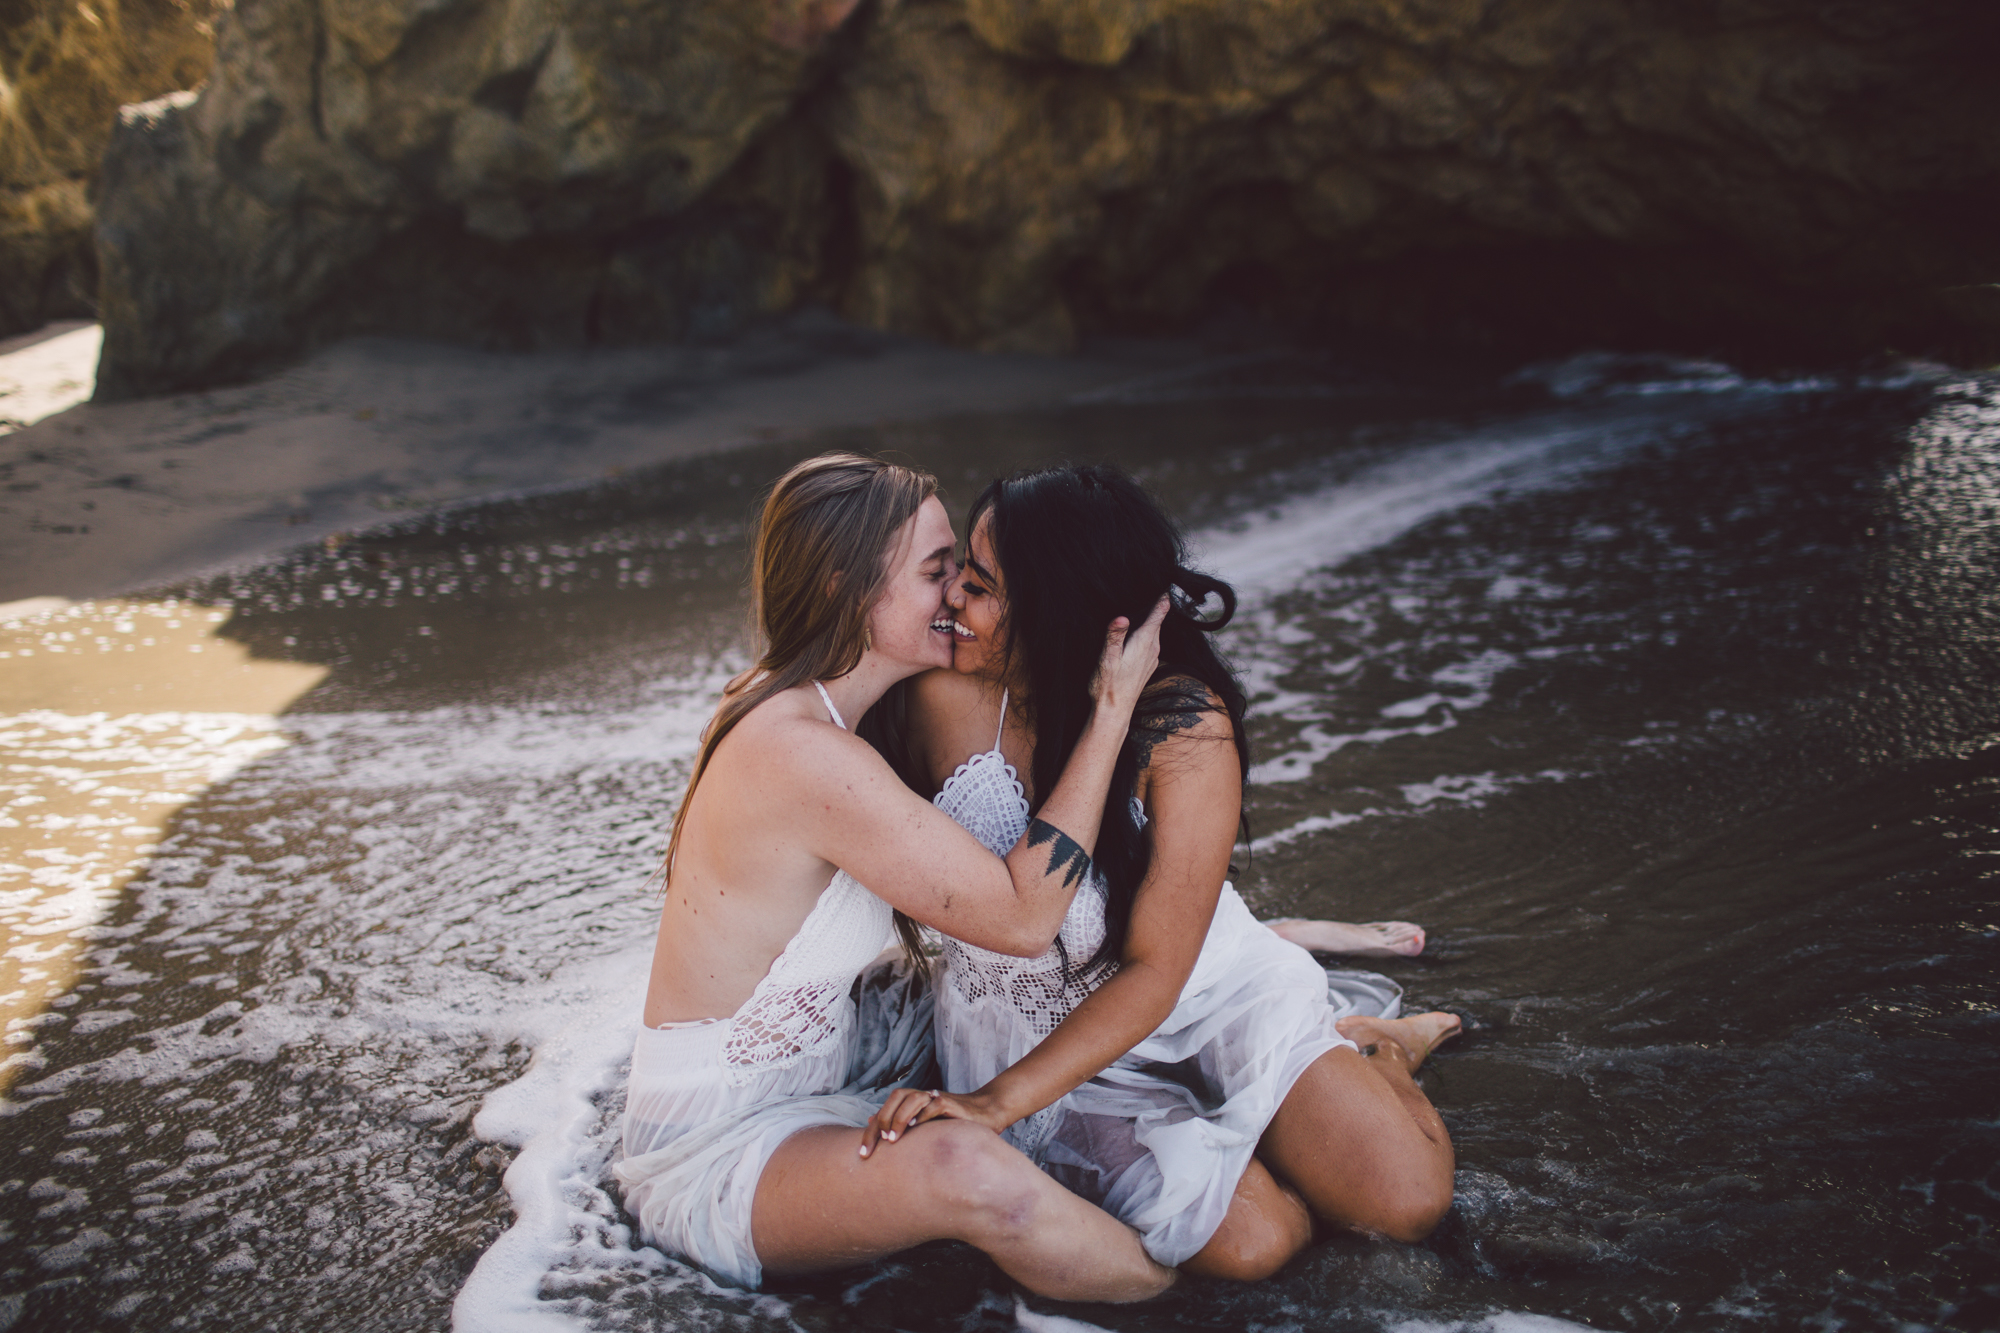 Two women kiss while on a beach.